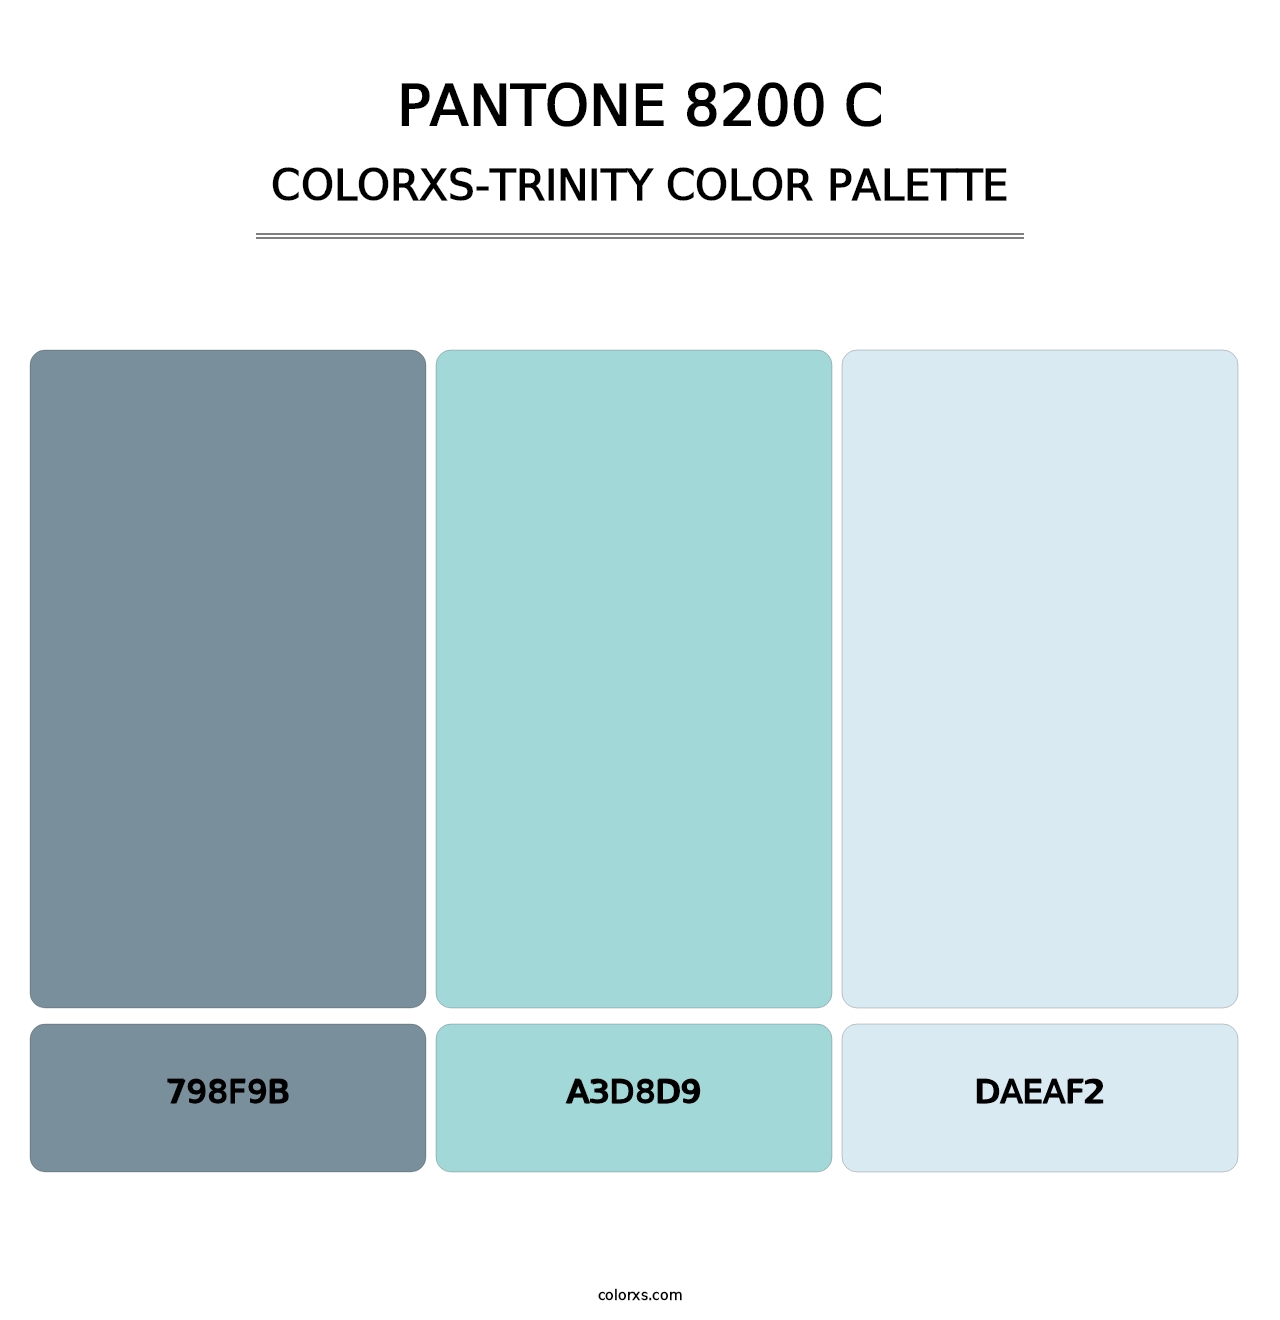 PANTONE 8200 C - Colorxs Trinity Palette